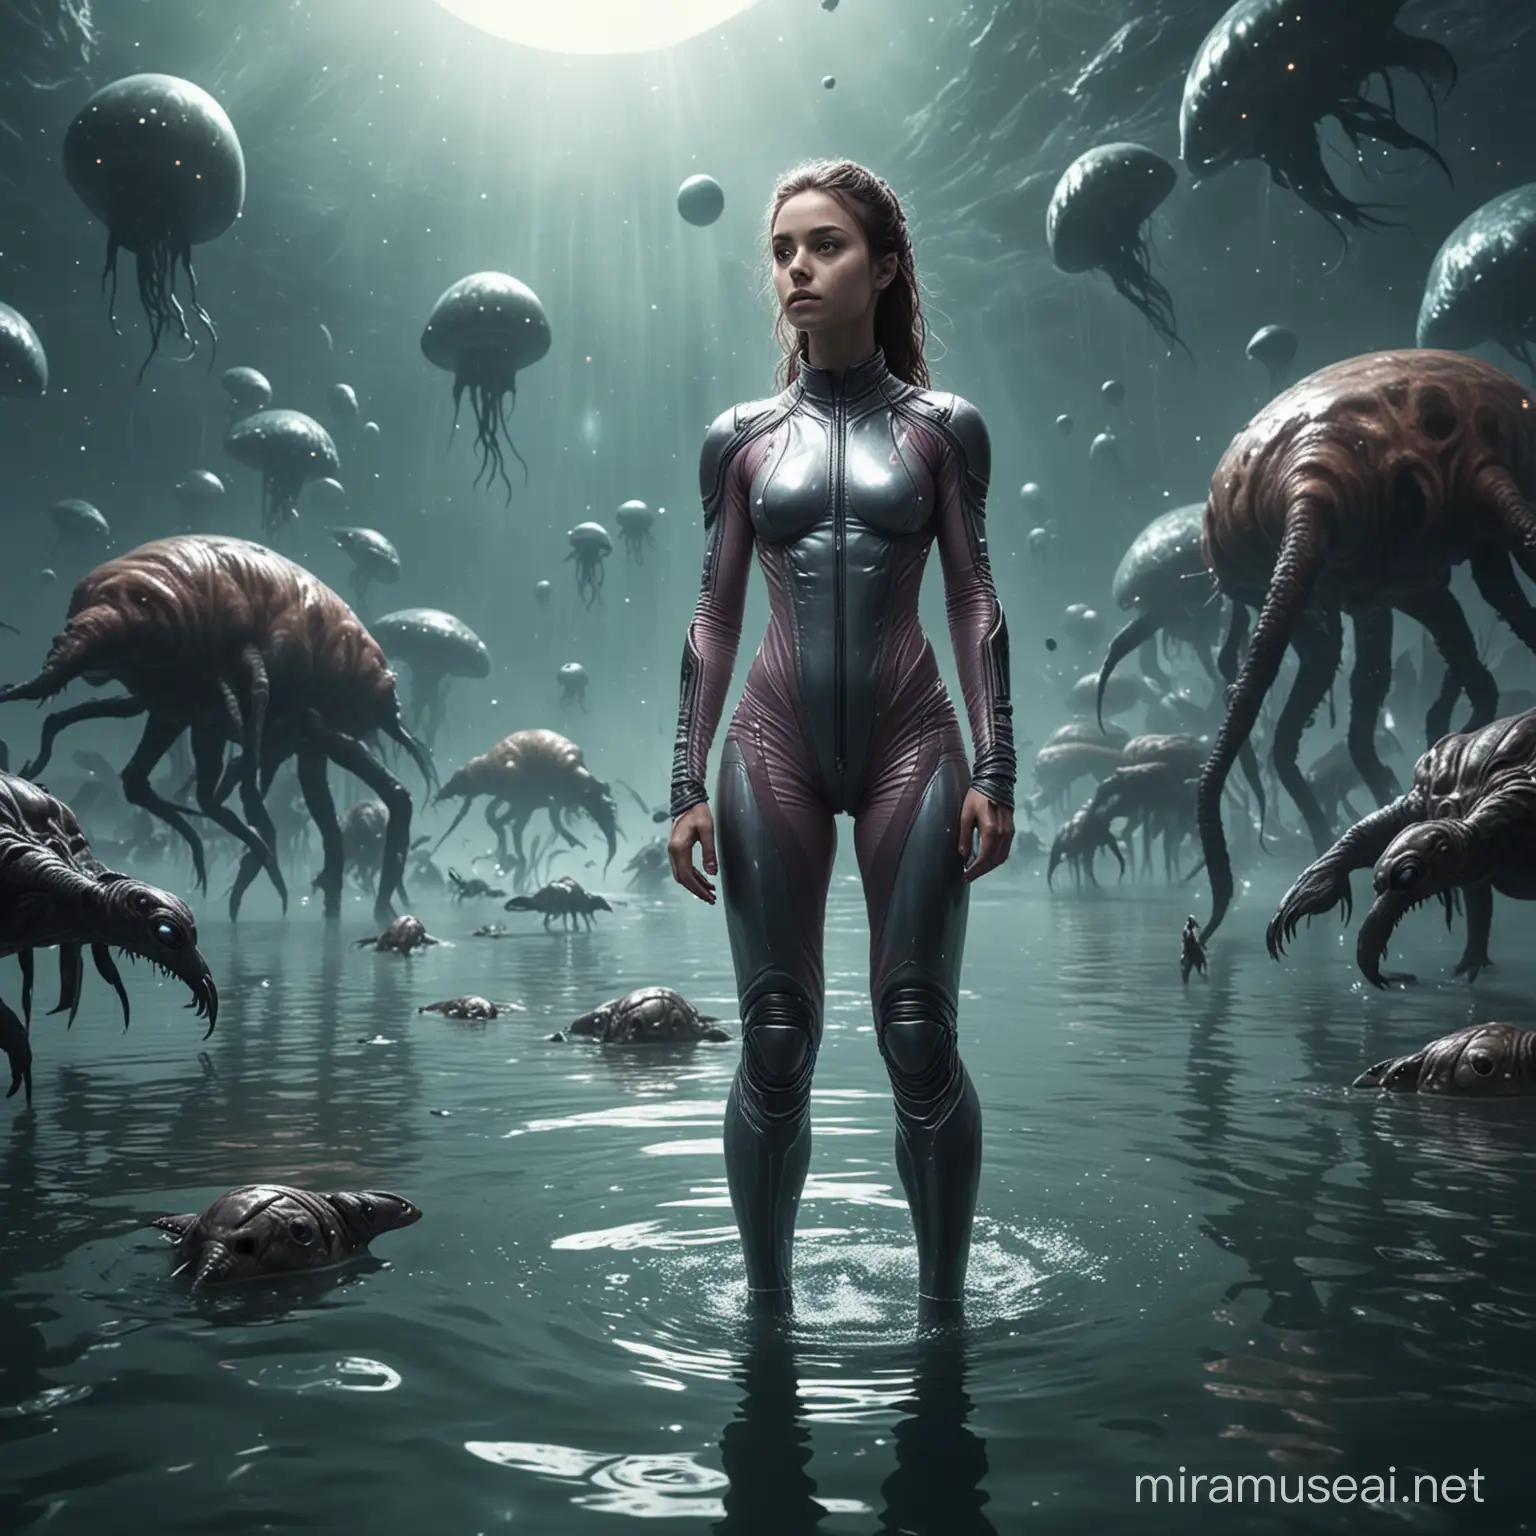 Exploring Alien Waters Petite Woman in Tight Spacesuit on Unfamiliar Planet